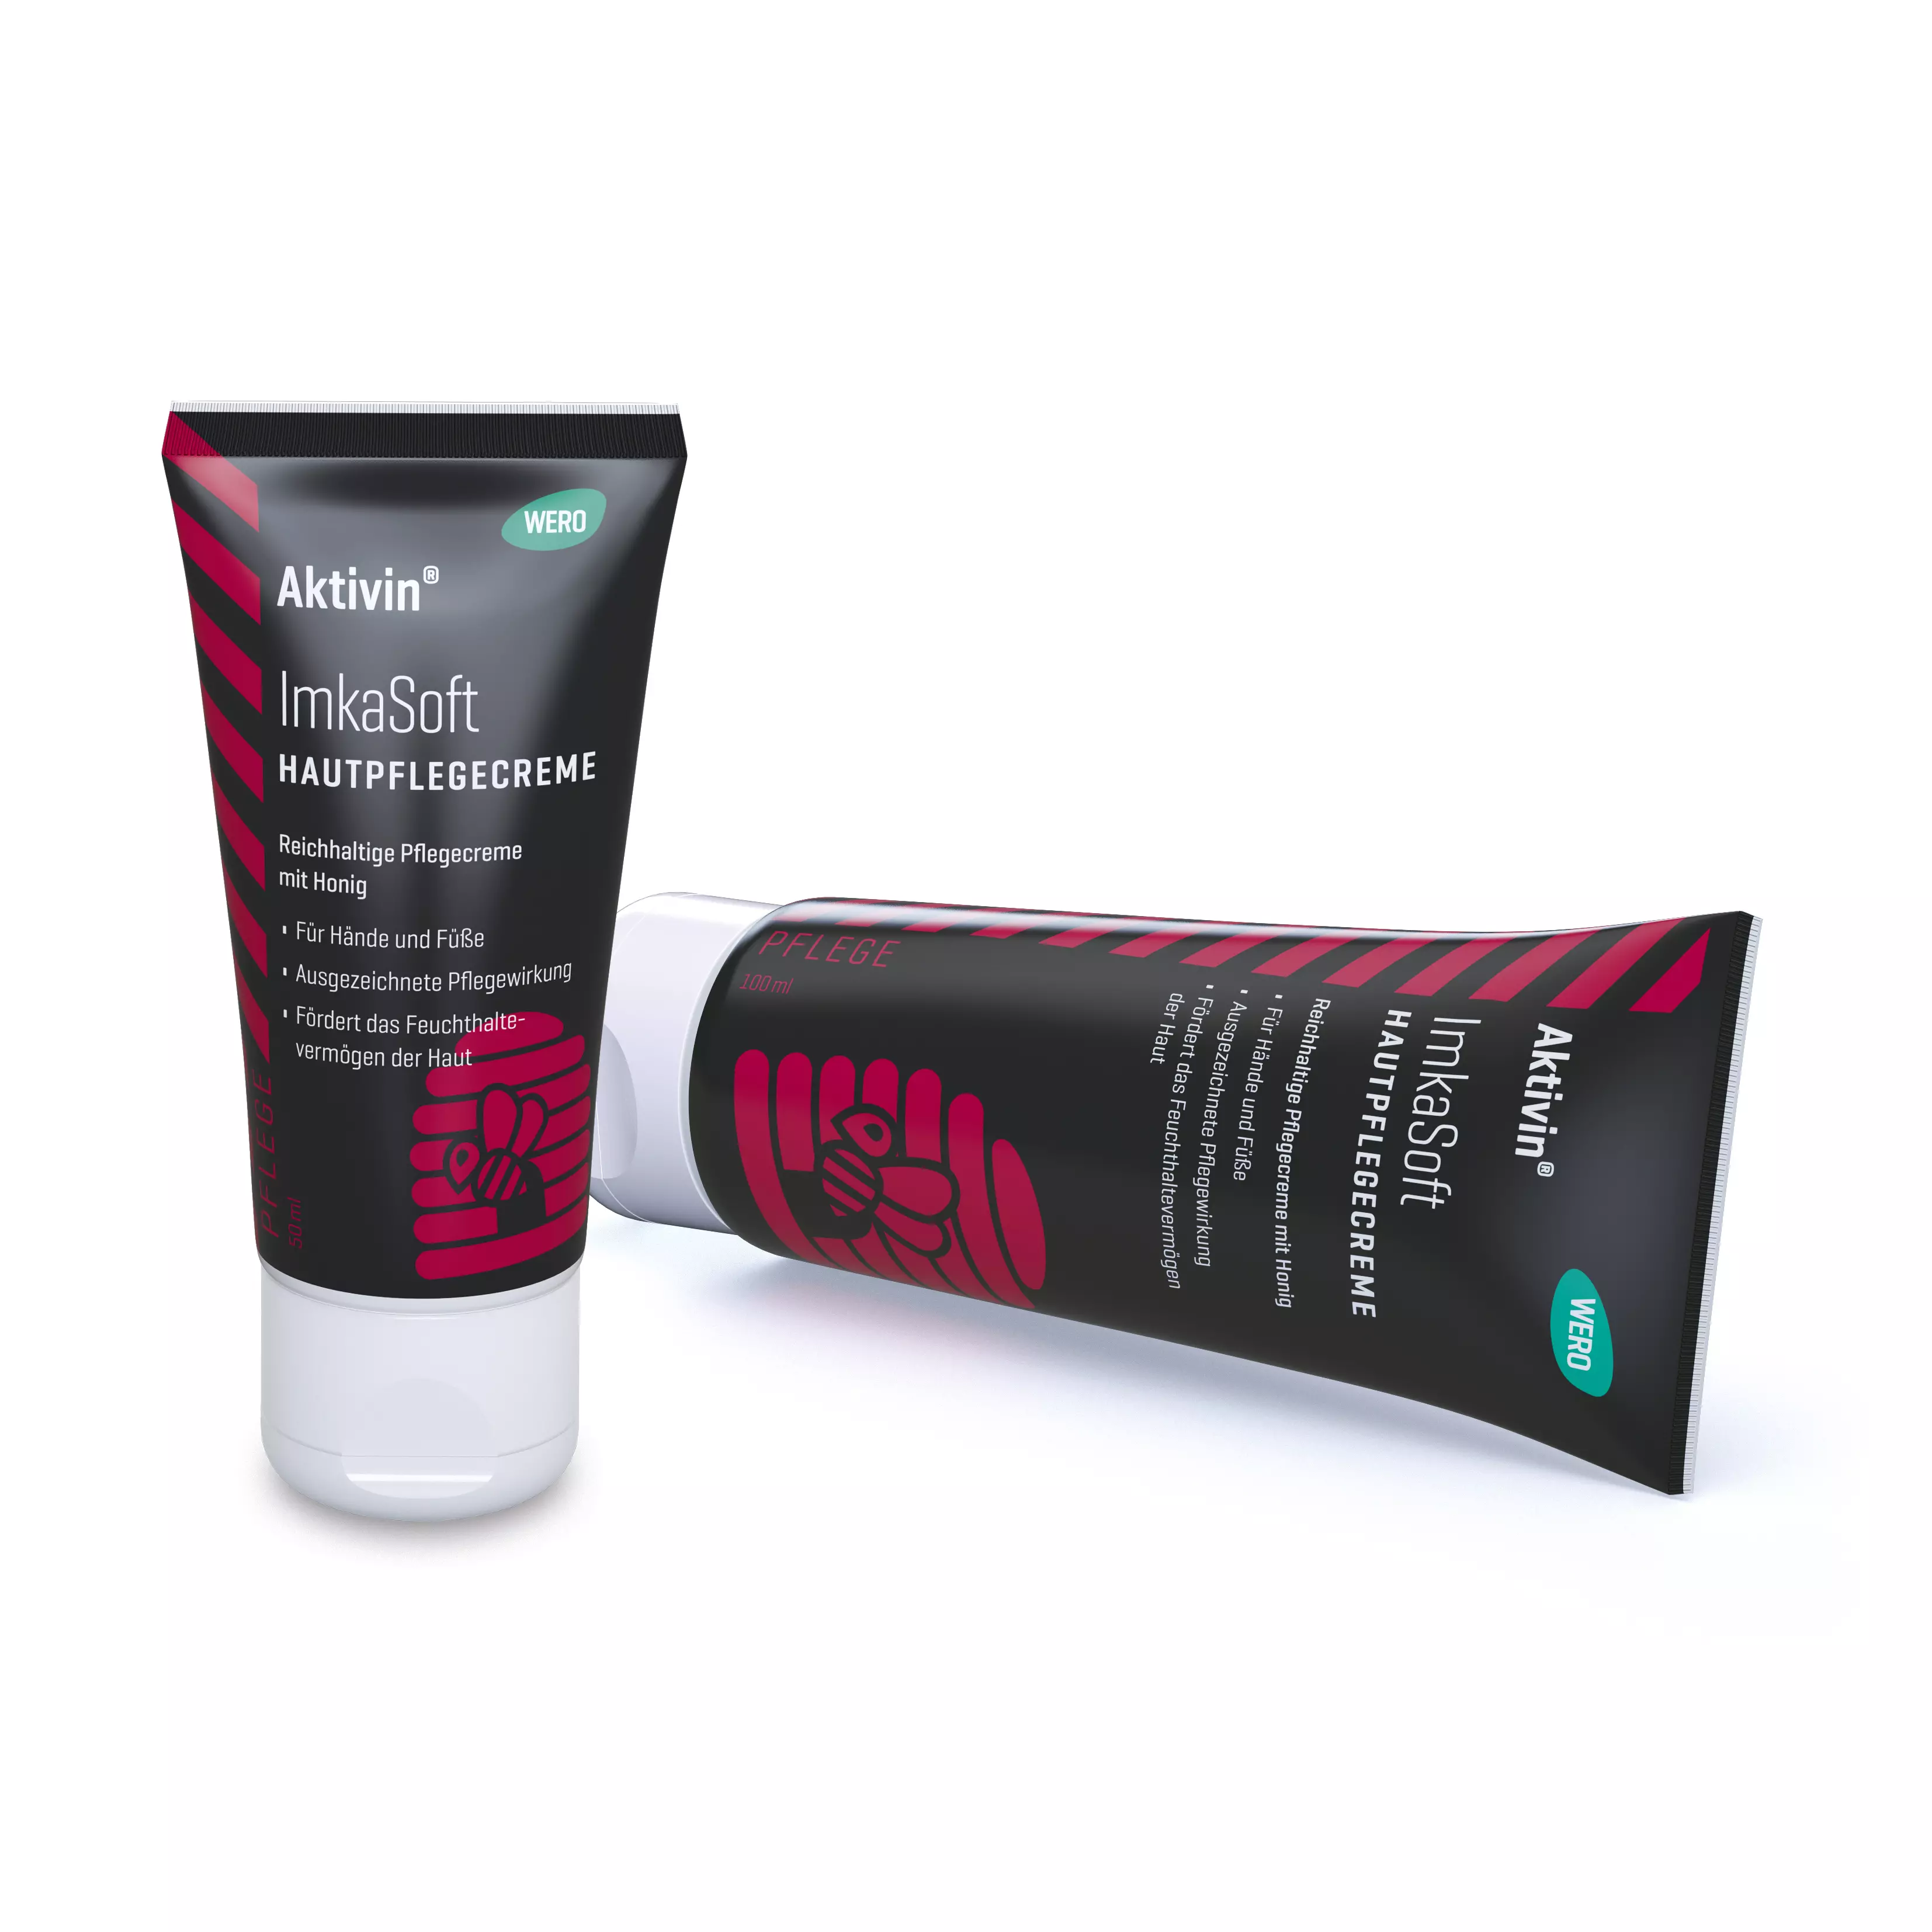 Aktivin® ImkaSoft skin care cream - 50 ml